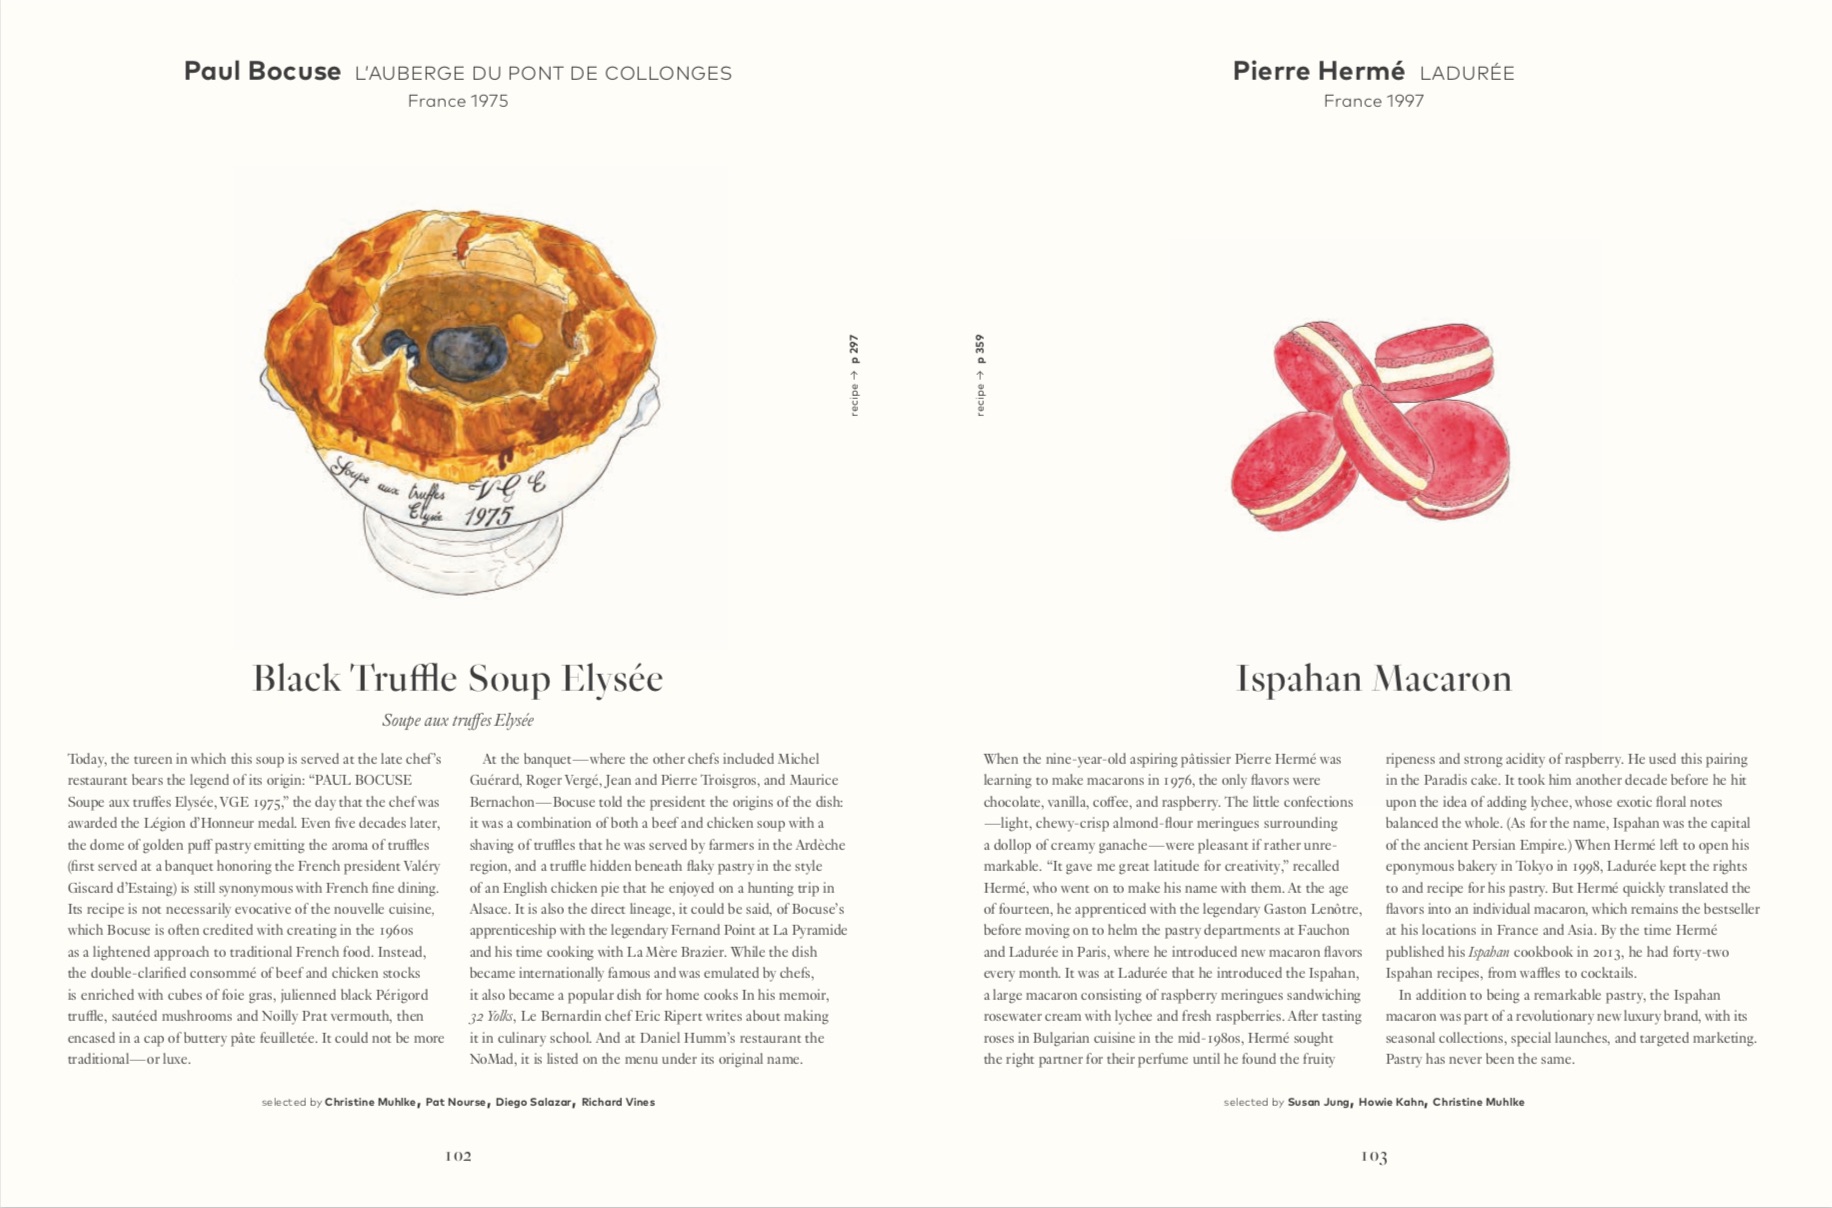 By Phaidon Press Ltd from Signature Dishes that Matter copyright Phaidon Press Ltd 2019